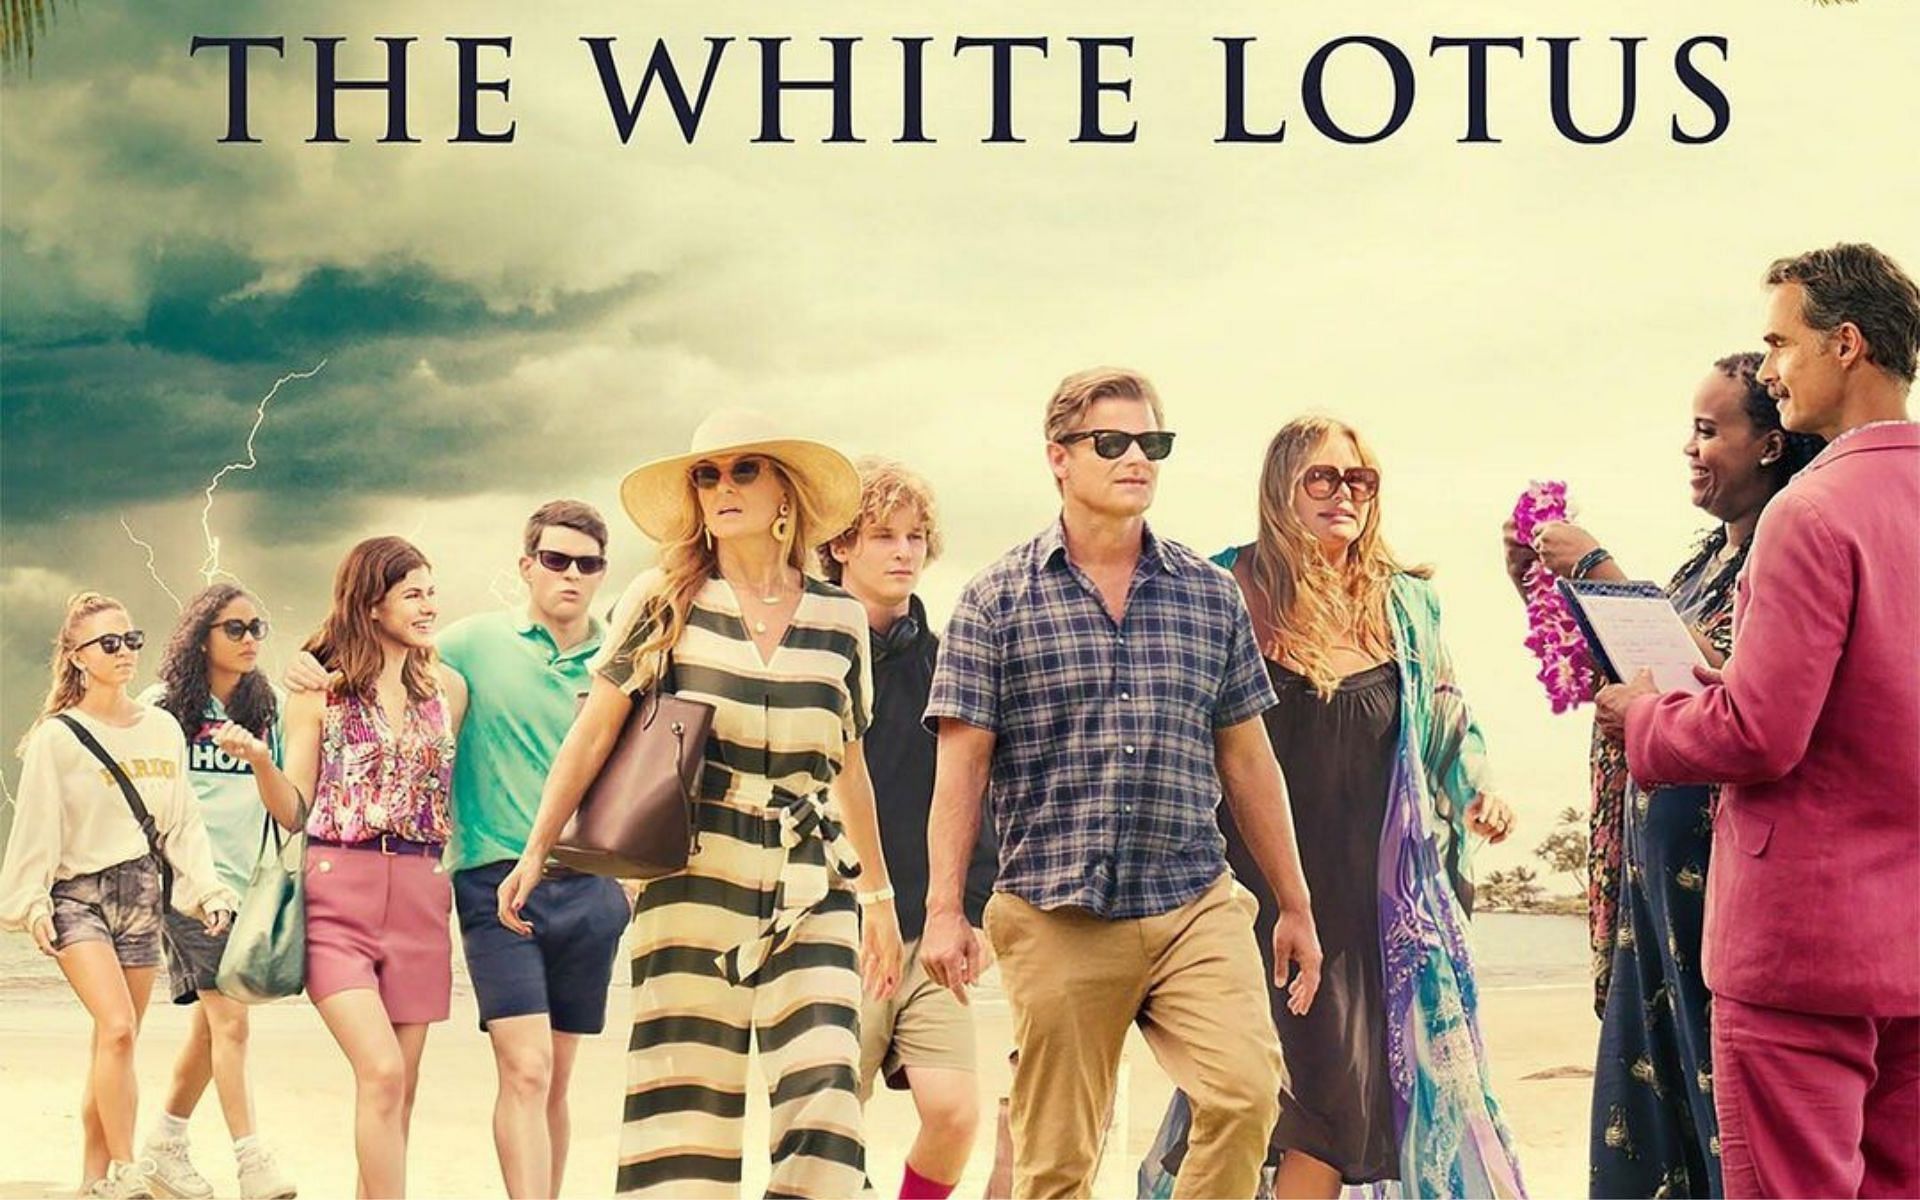 The White Lotus has been renewed for Season 2 (Image via michaelthomasph @Instagram)